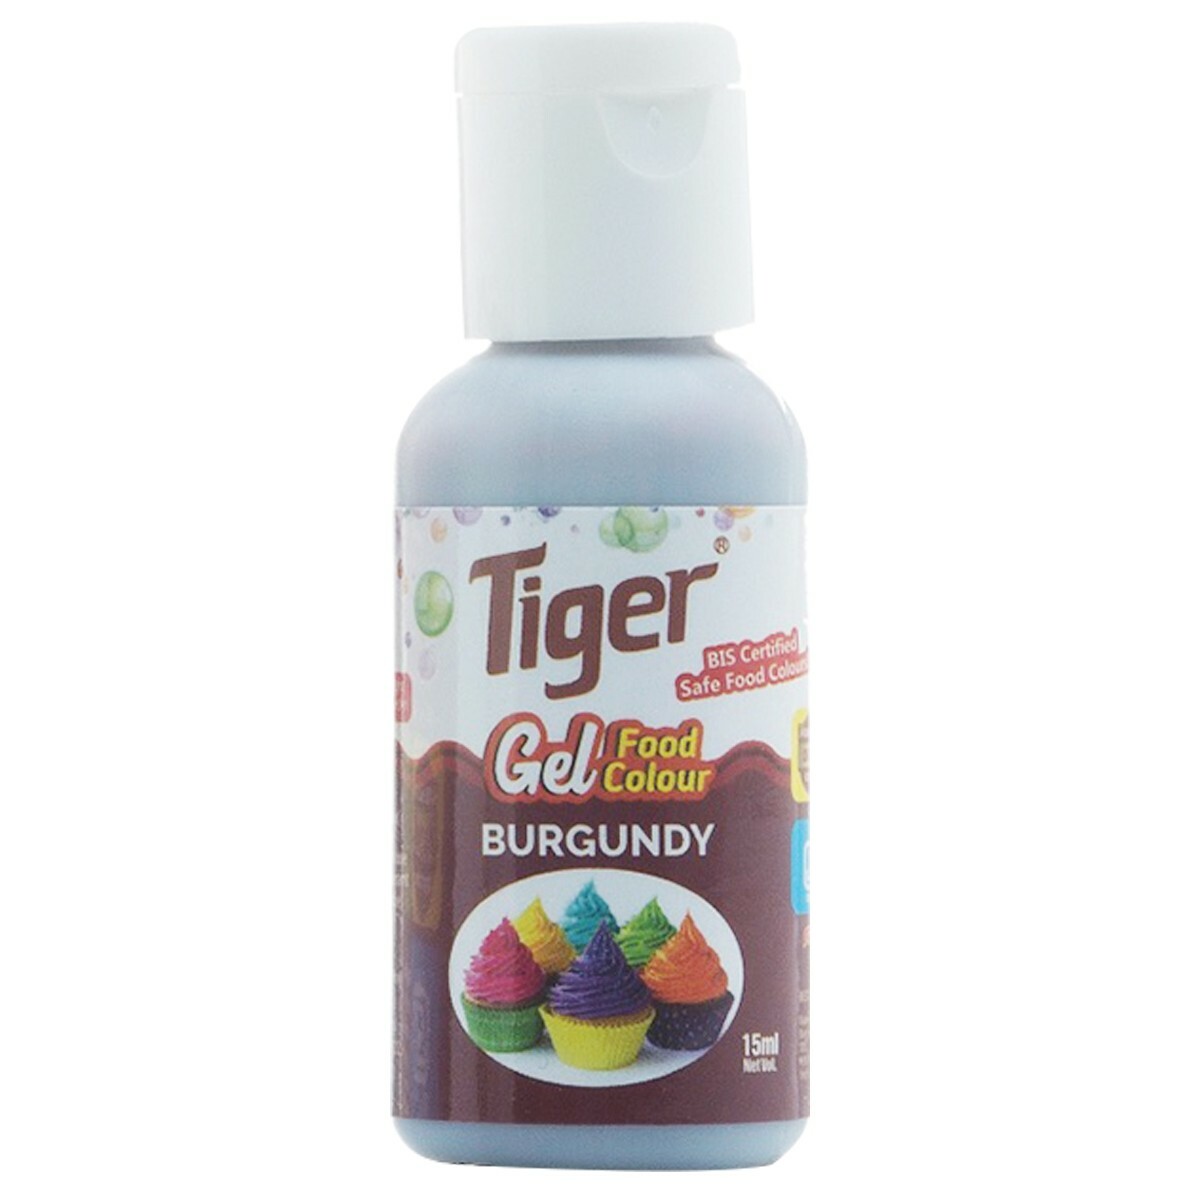 Tiger Gel Colour Burgundy 15ml